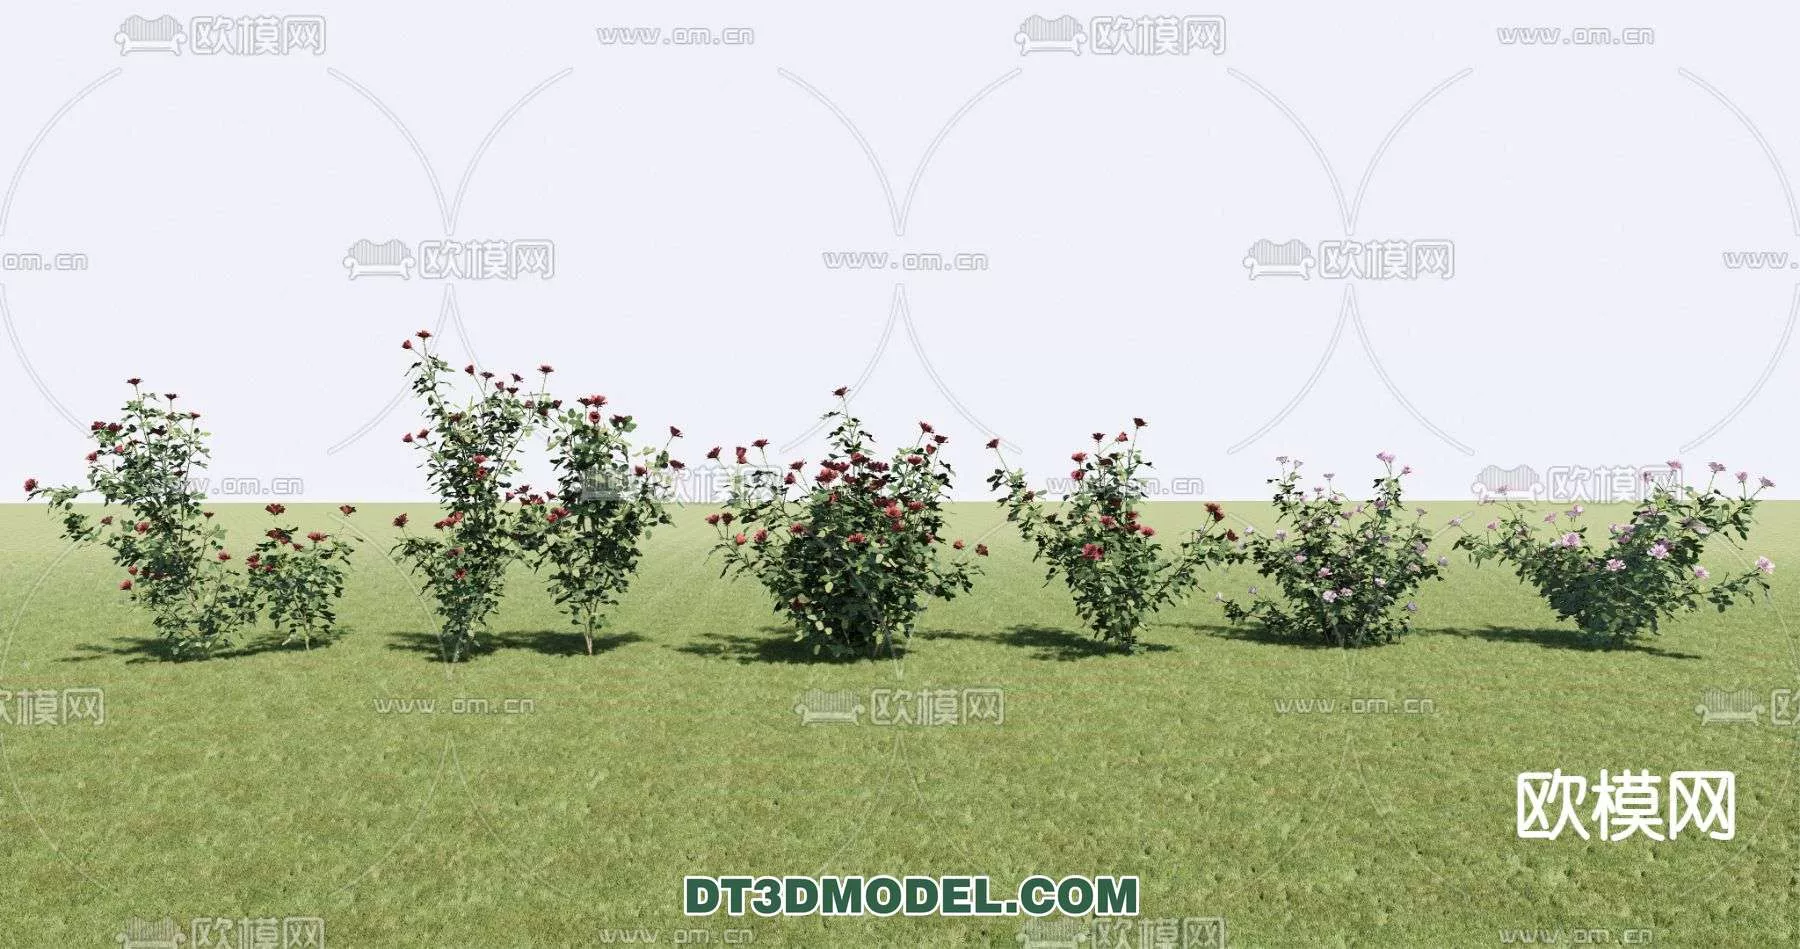 MODERN UNDERSHRUB - SKETCHUP 3D MODEL - VRAY OR ENSCAPE - ID15741